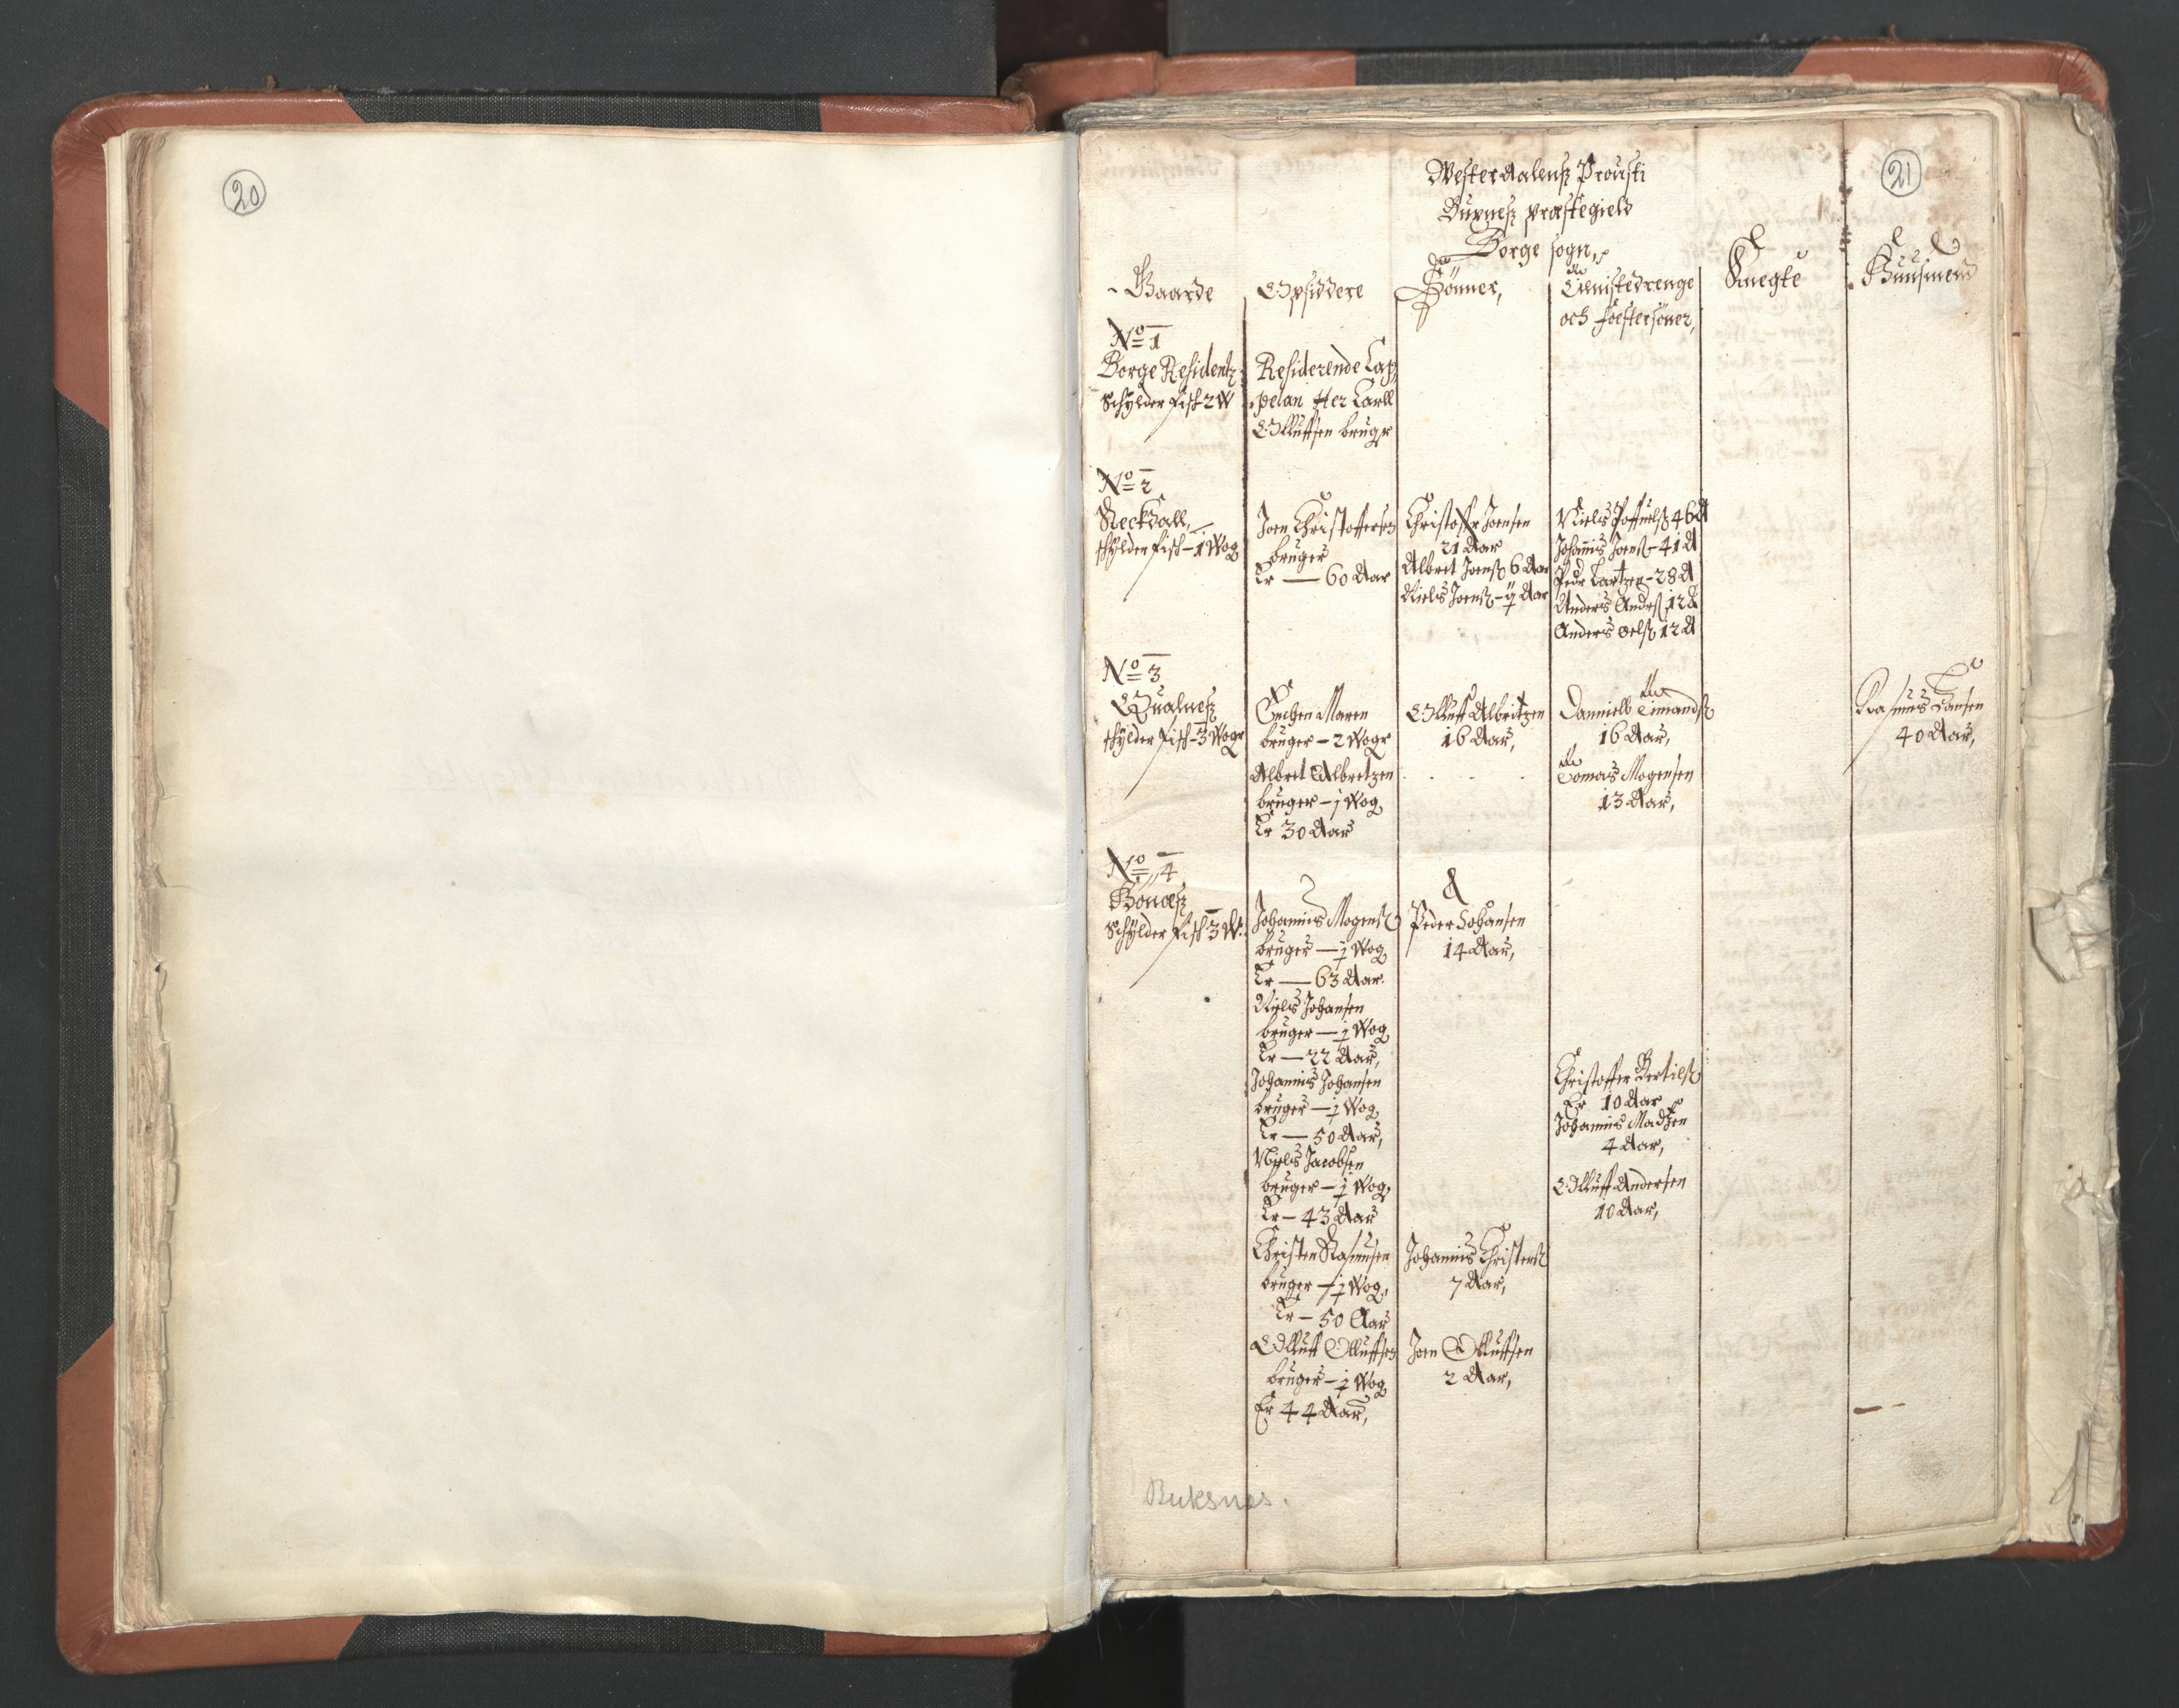 RA, Vicar's Census 1664-1666, no. 36: Lofoten and Vesterålen deanery, Senja deanery and Troms deanery, 1664-1666, p. 20-21